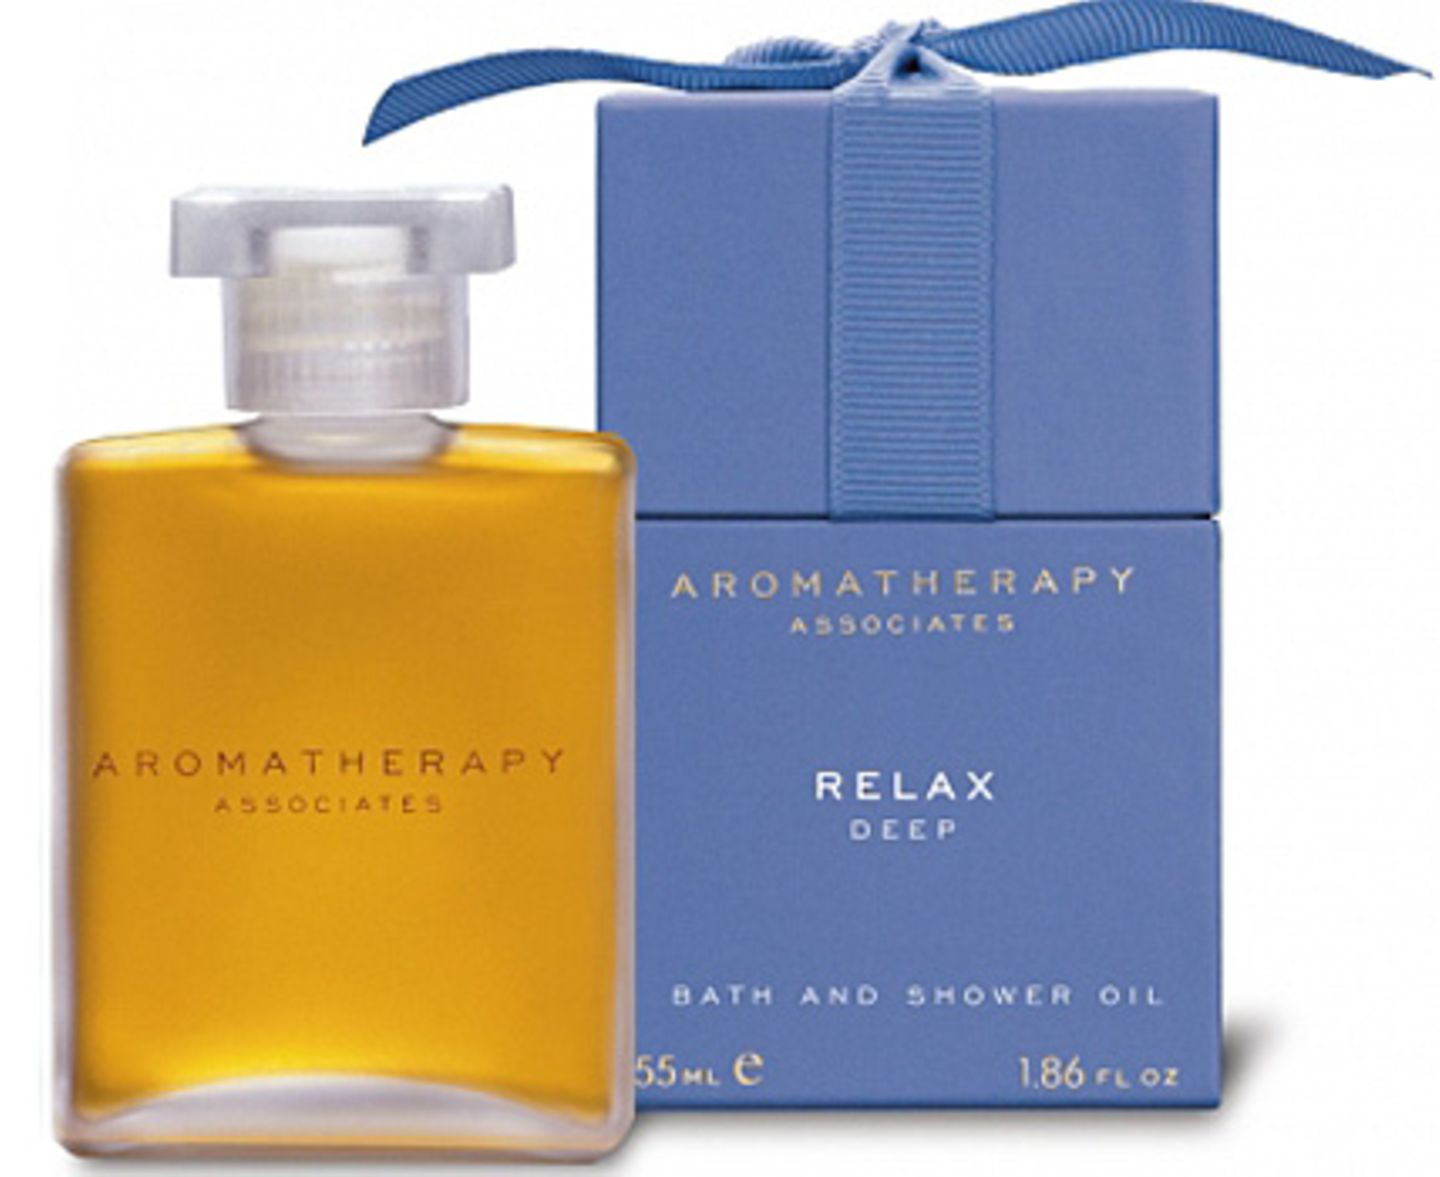 aromatherapy-relax-deep